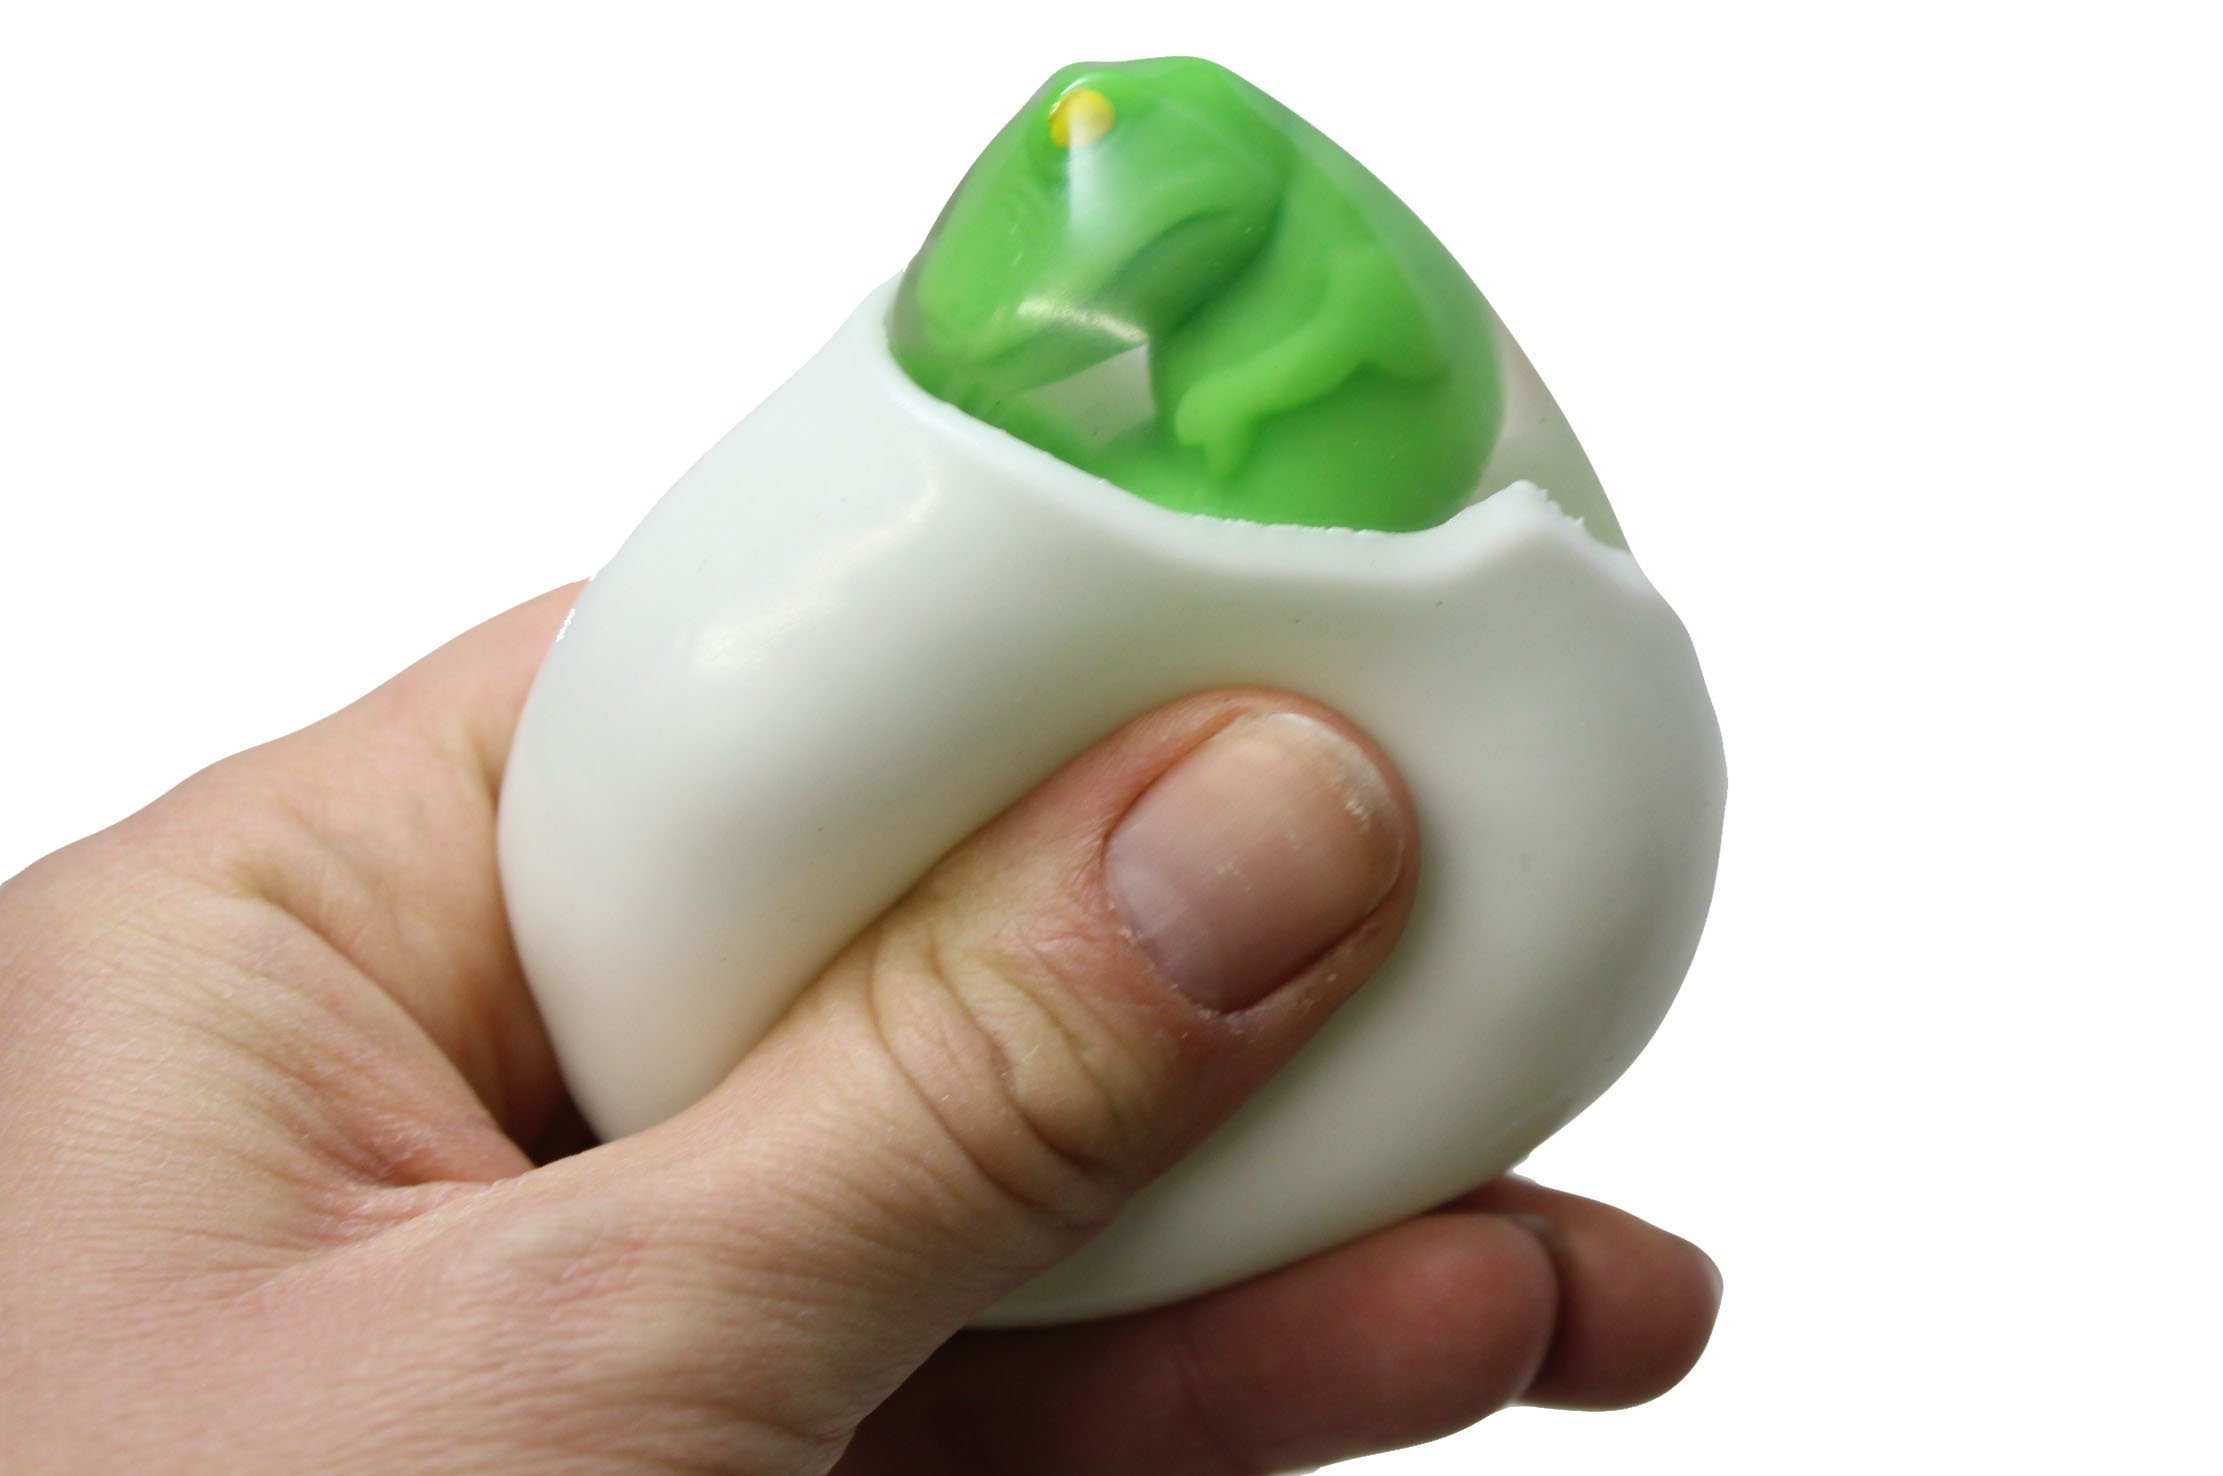 Hatching Dinosaur Egg Squeeze Stress Ball - Squishy Toy - Sensory